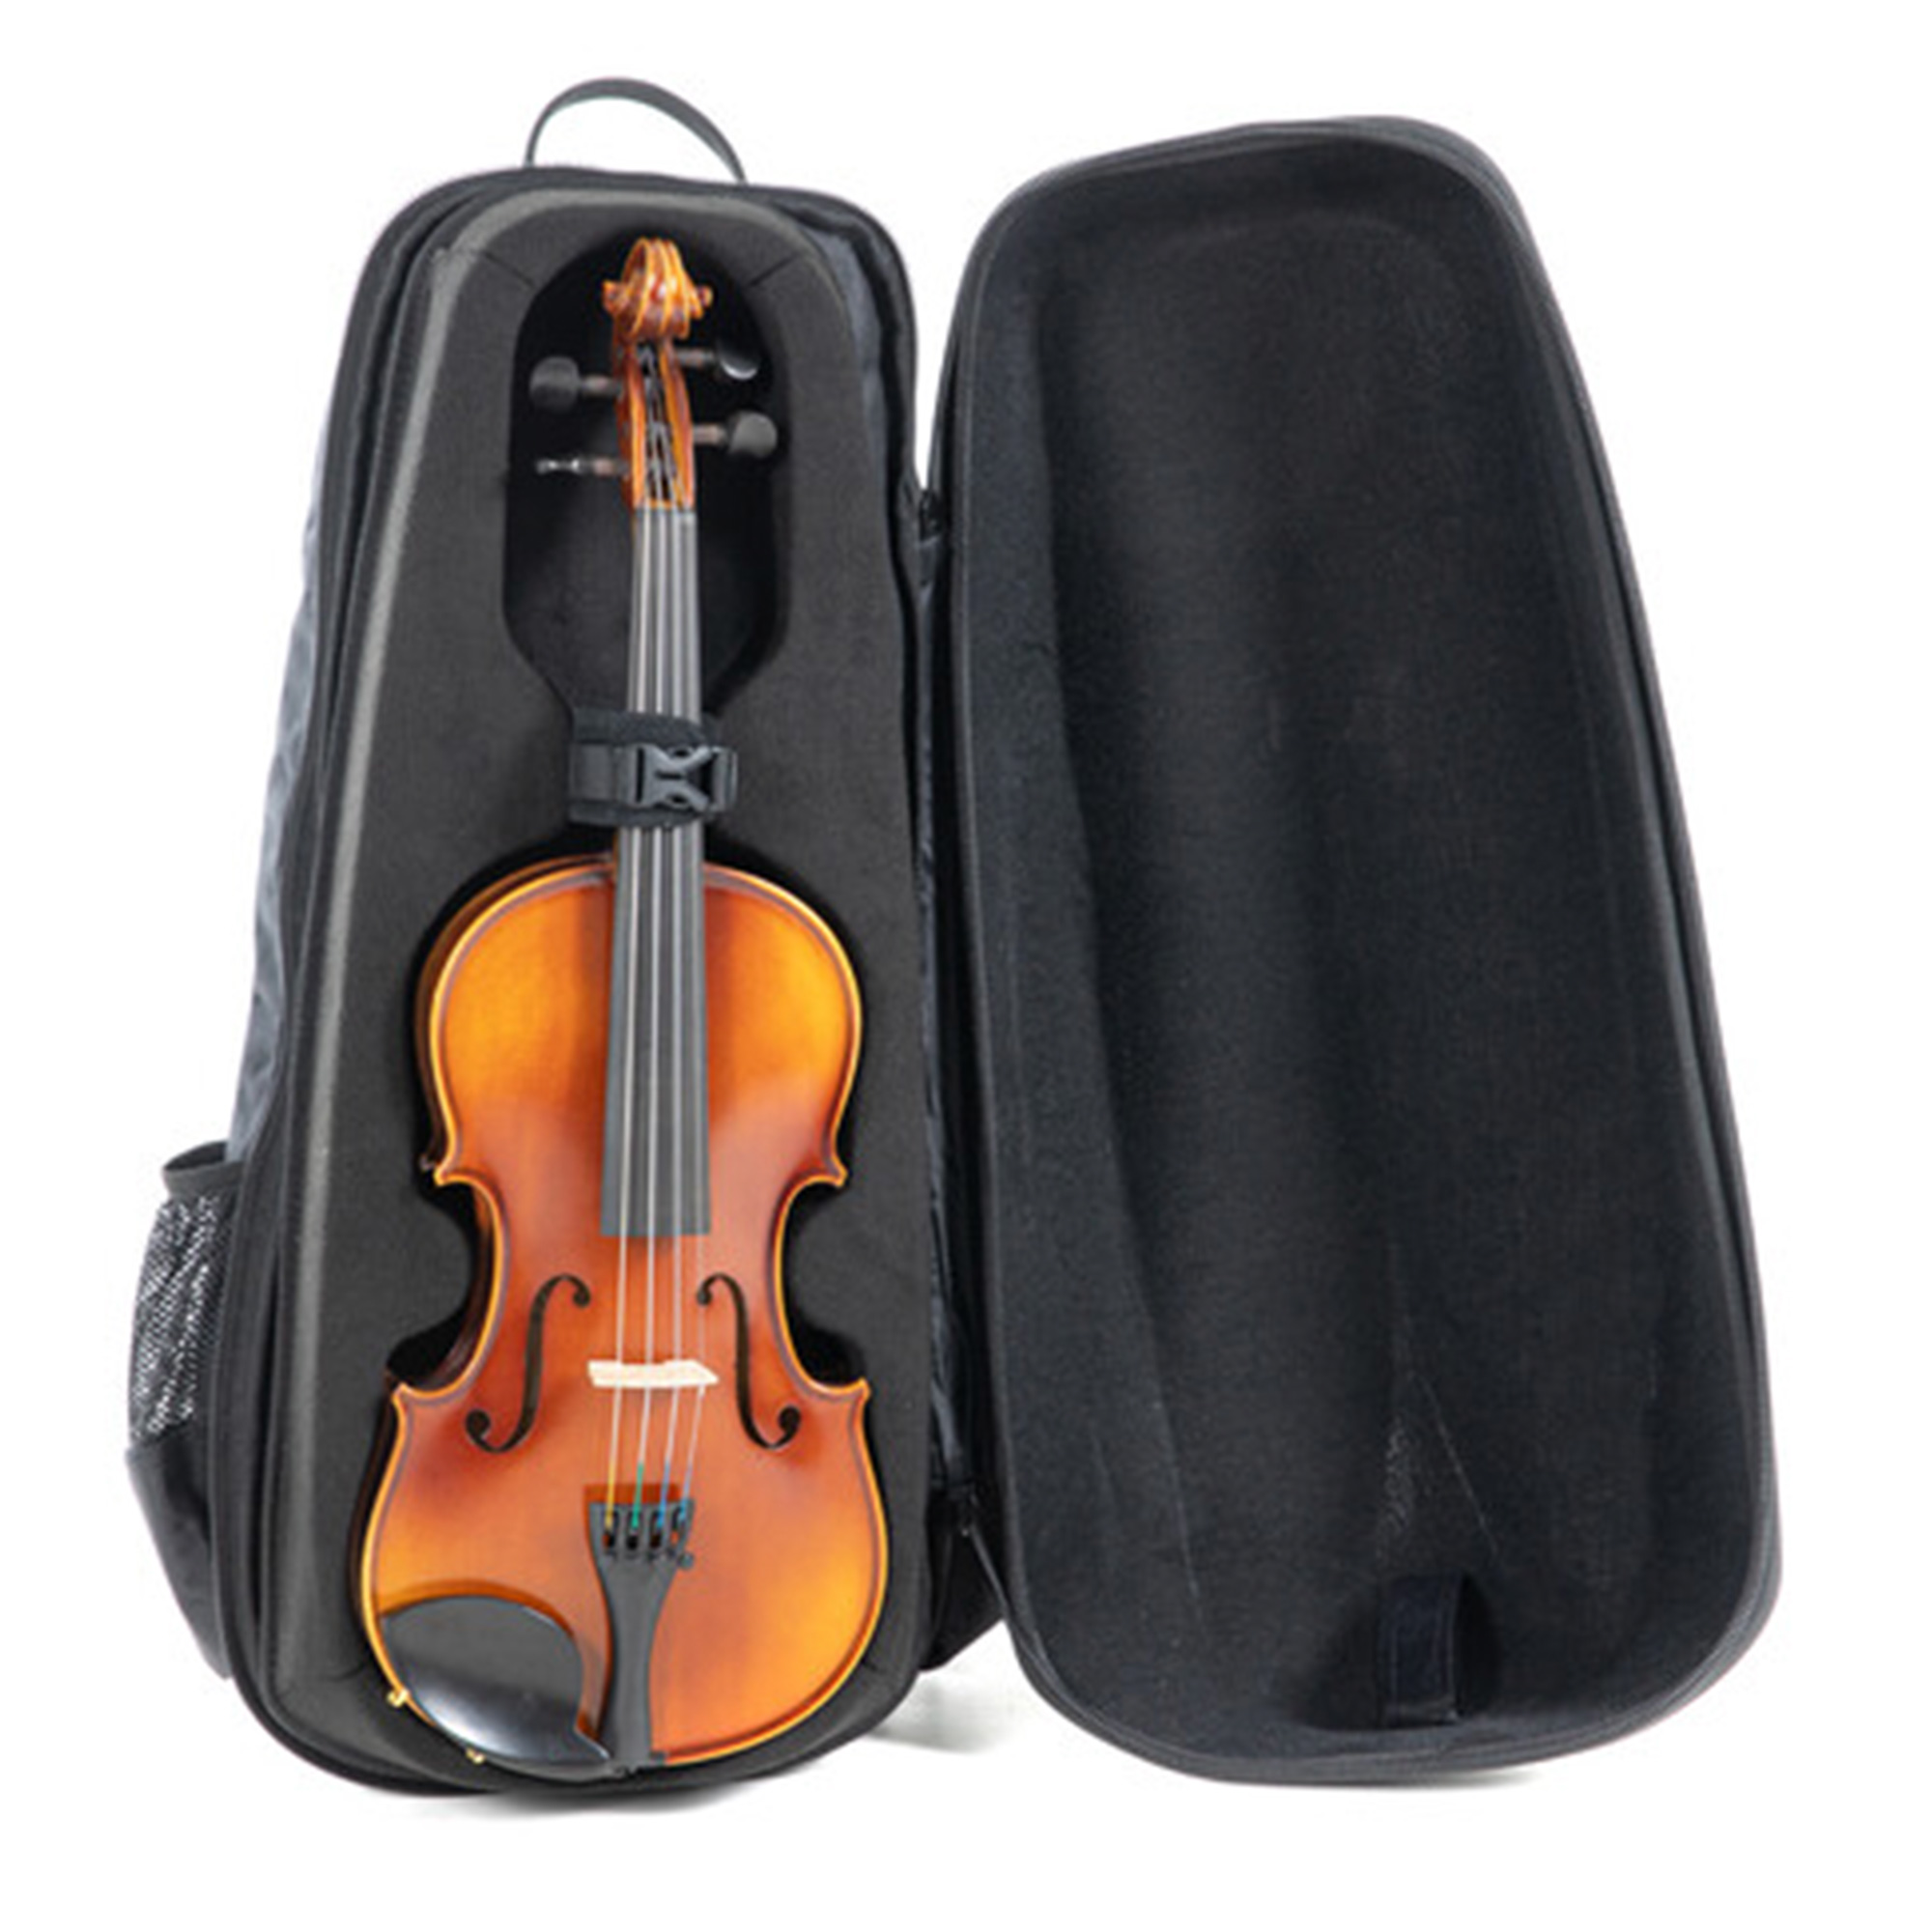 GEWA Space Bag Rucksack For Violin in action